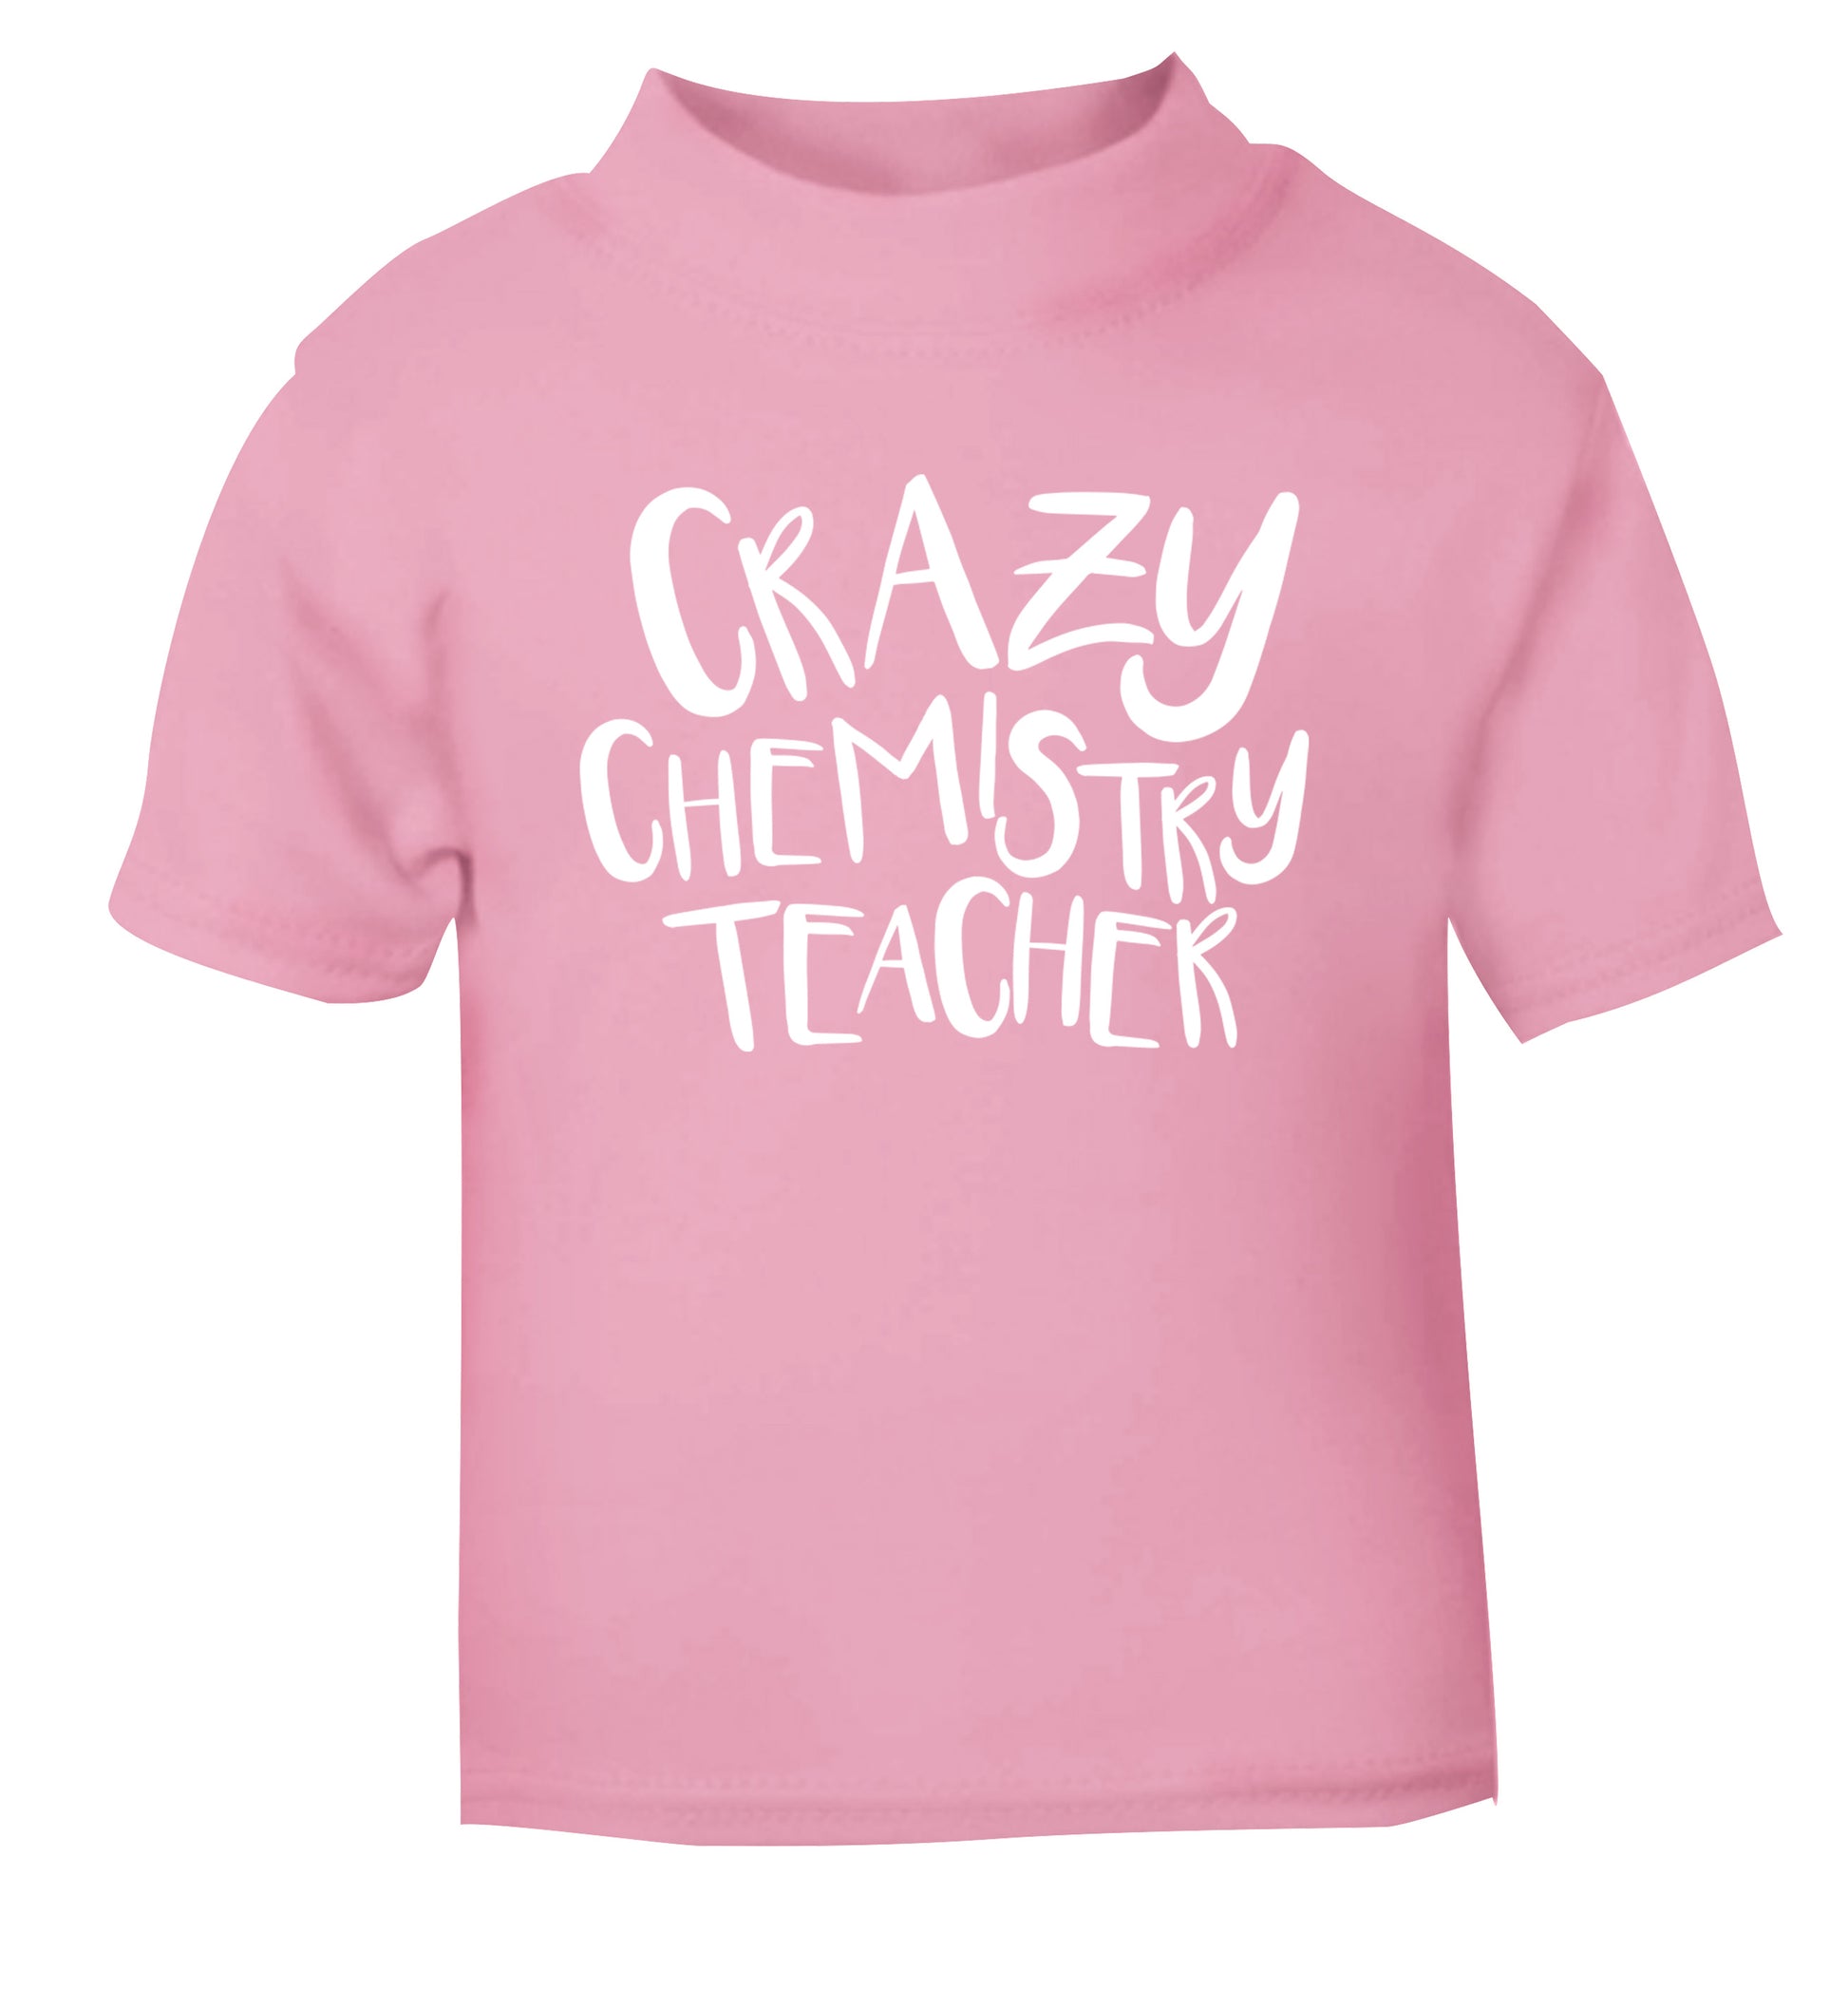 Crazy chemistry teacher light pink Baby Toddler Tshirt 2 Years